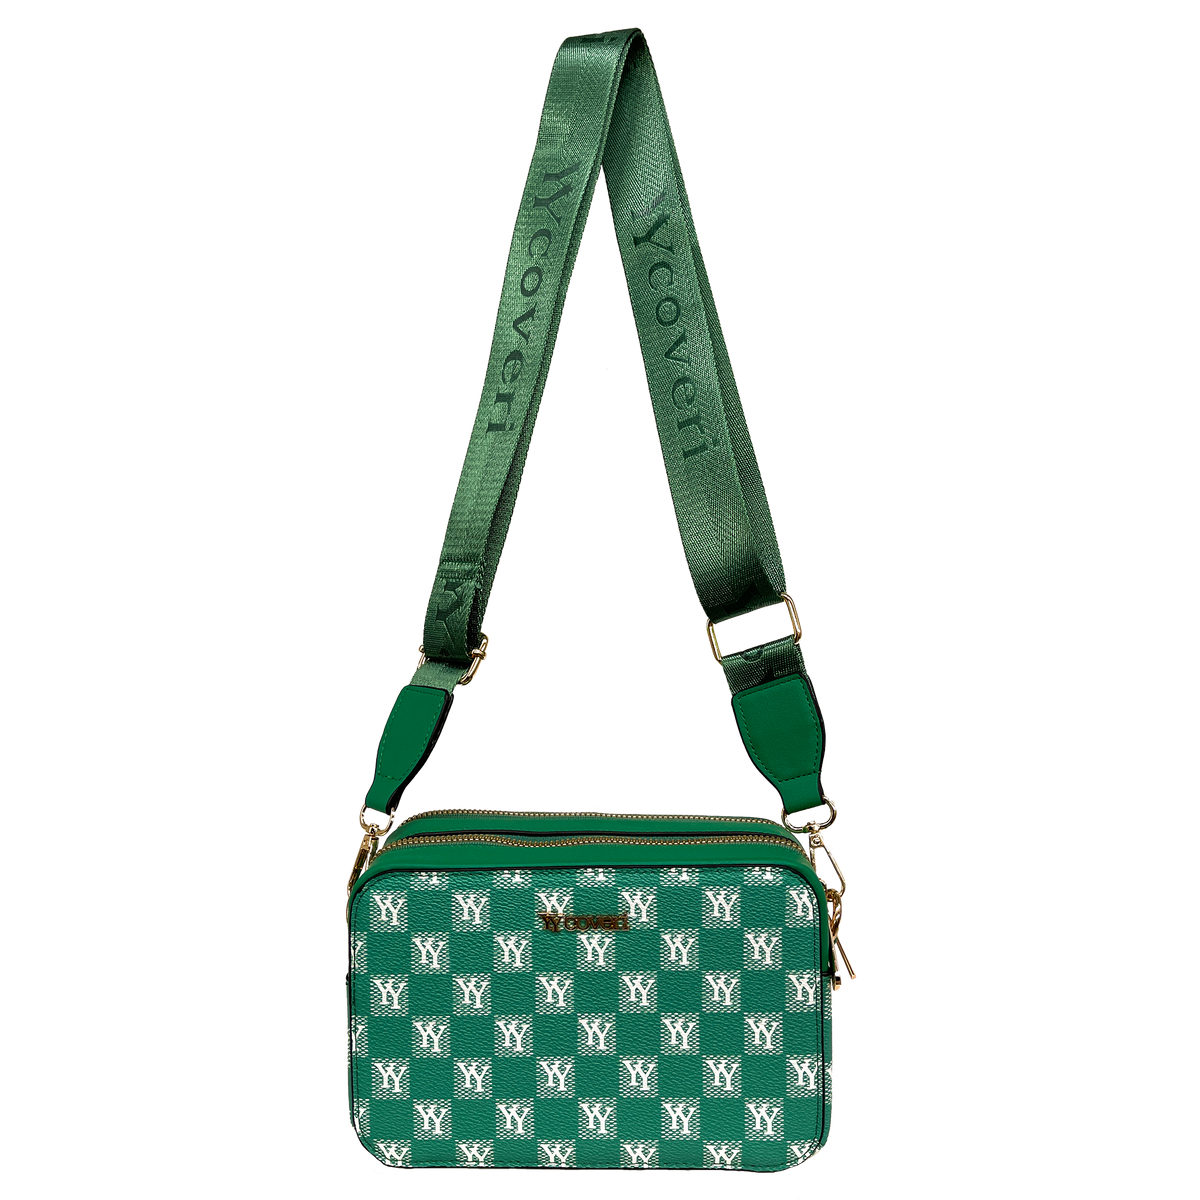 YY Coveri - Designer Shoulder Bag with Iconic Motif - Carry Elegance Everywhere
